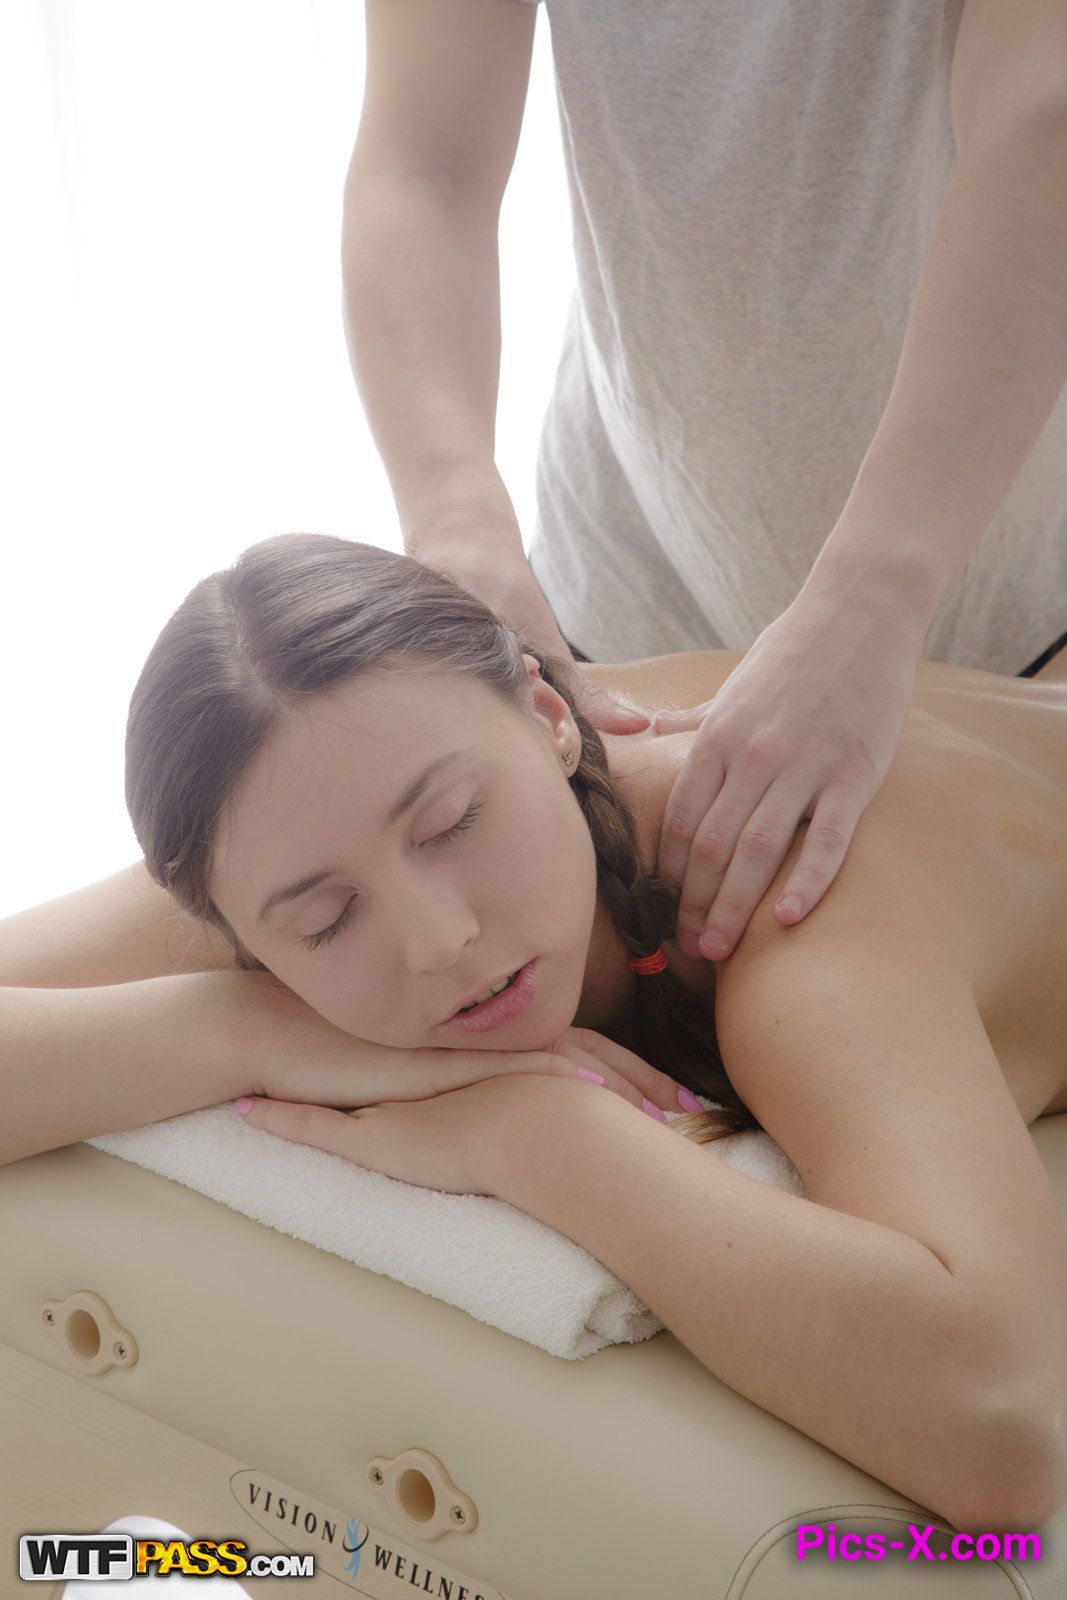 Hot massage girl enjoys the wildest fucking session - HD Massage Porn - Image 37